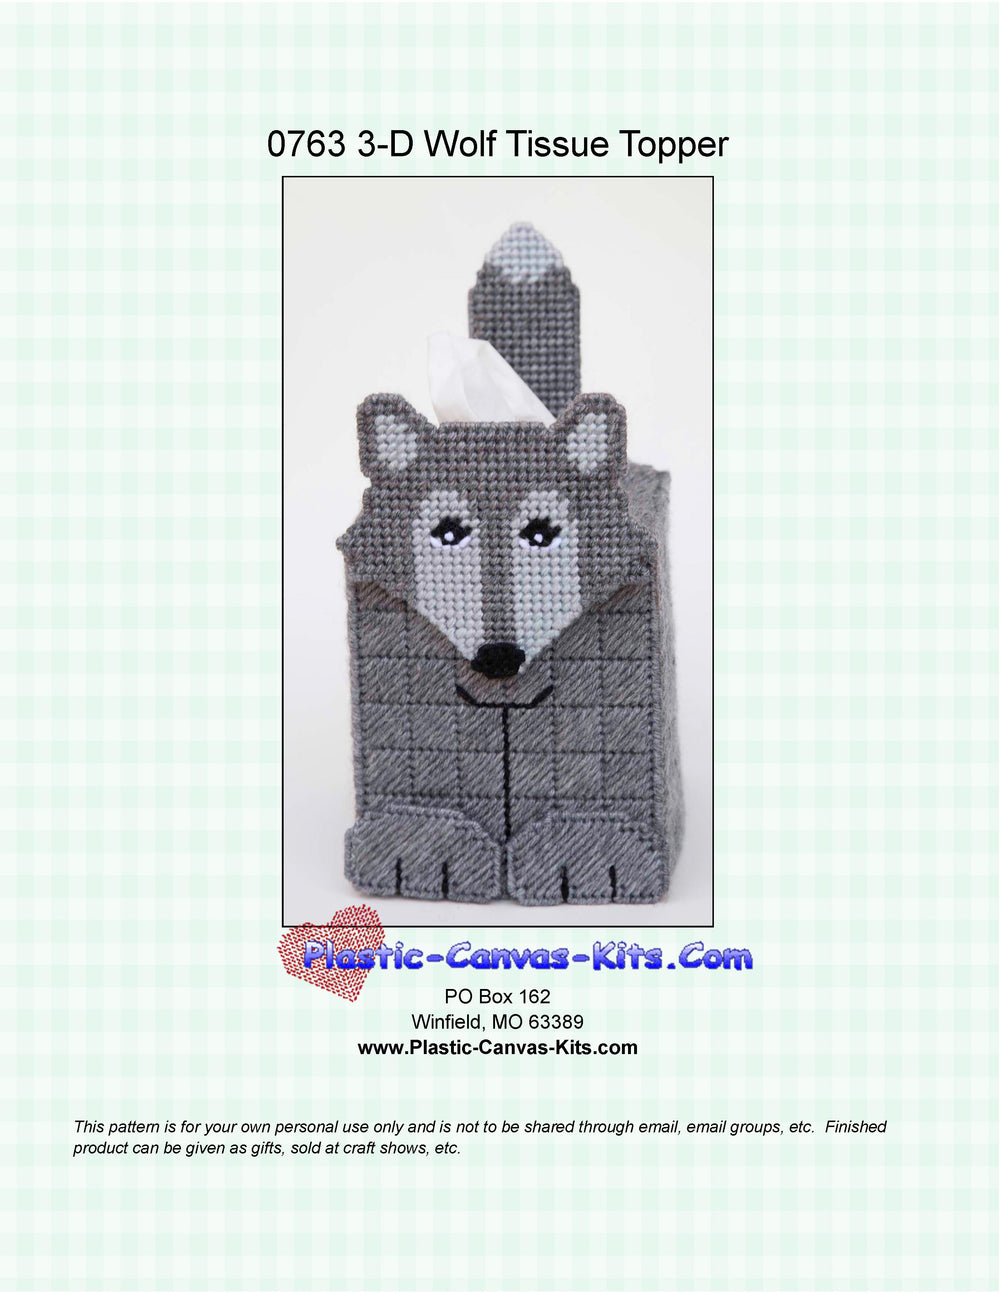 Wolf 3-D Tissue Topper